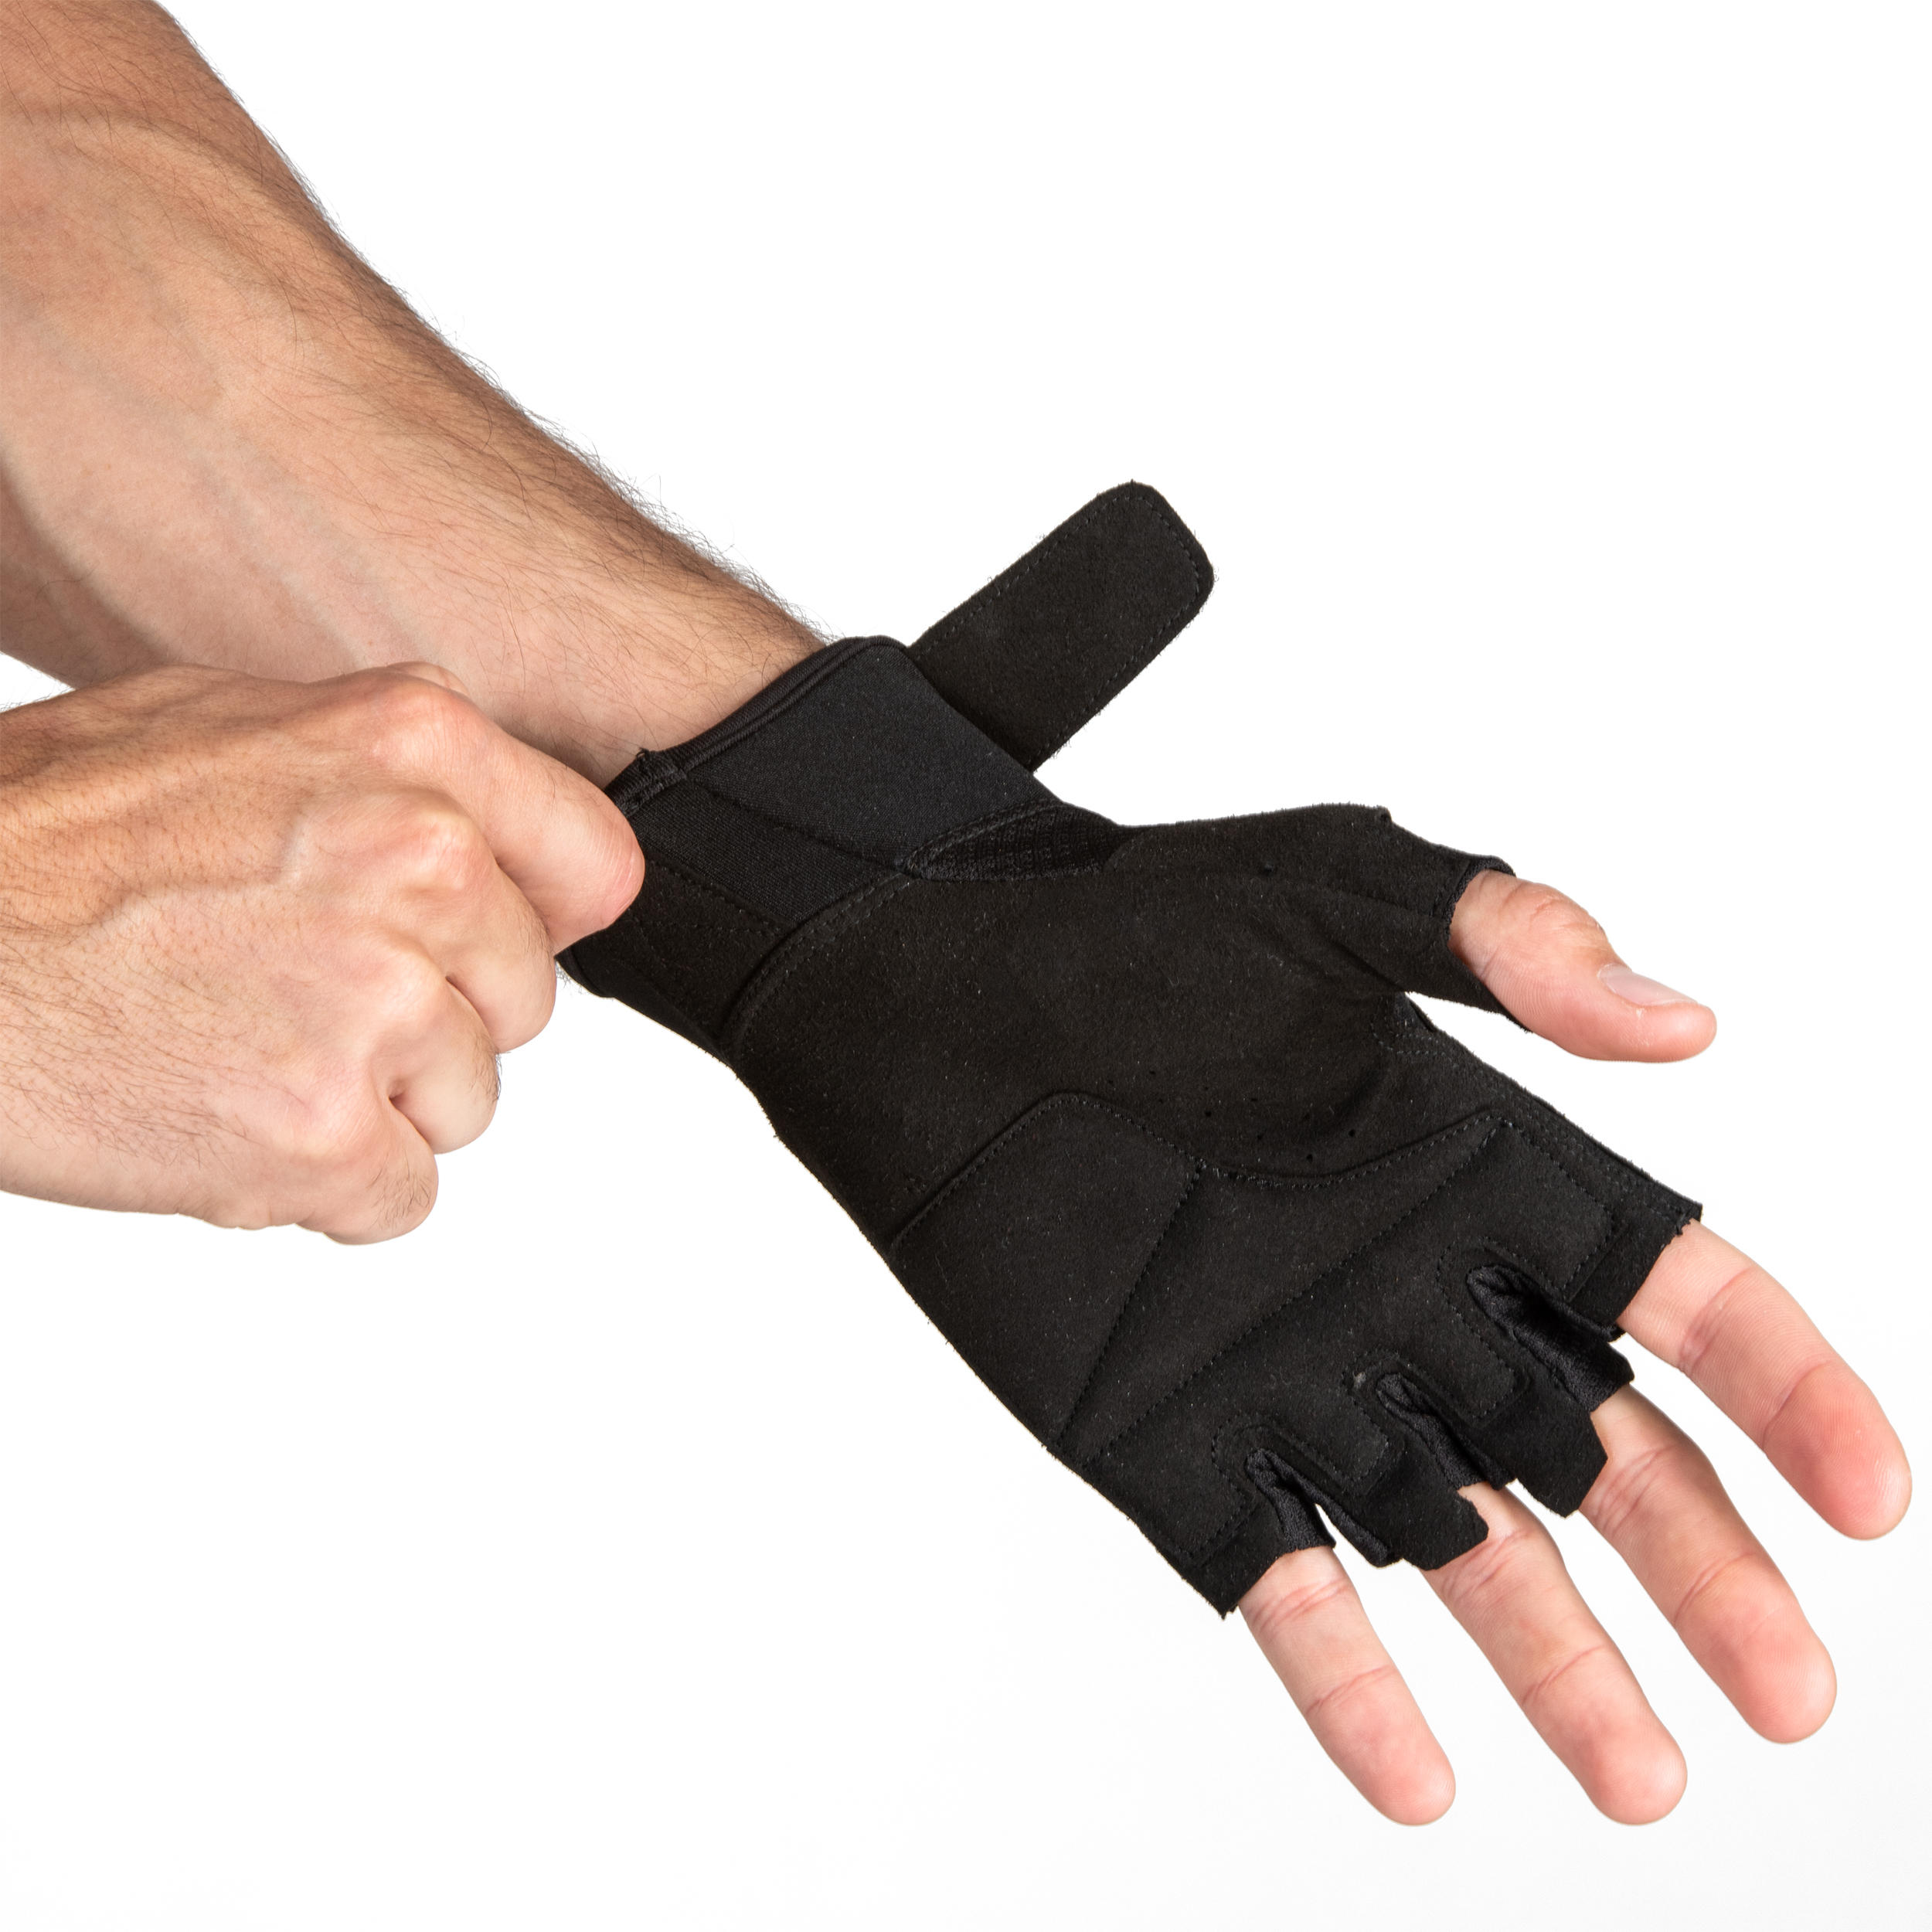 decathlon weight lifting gloves